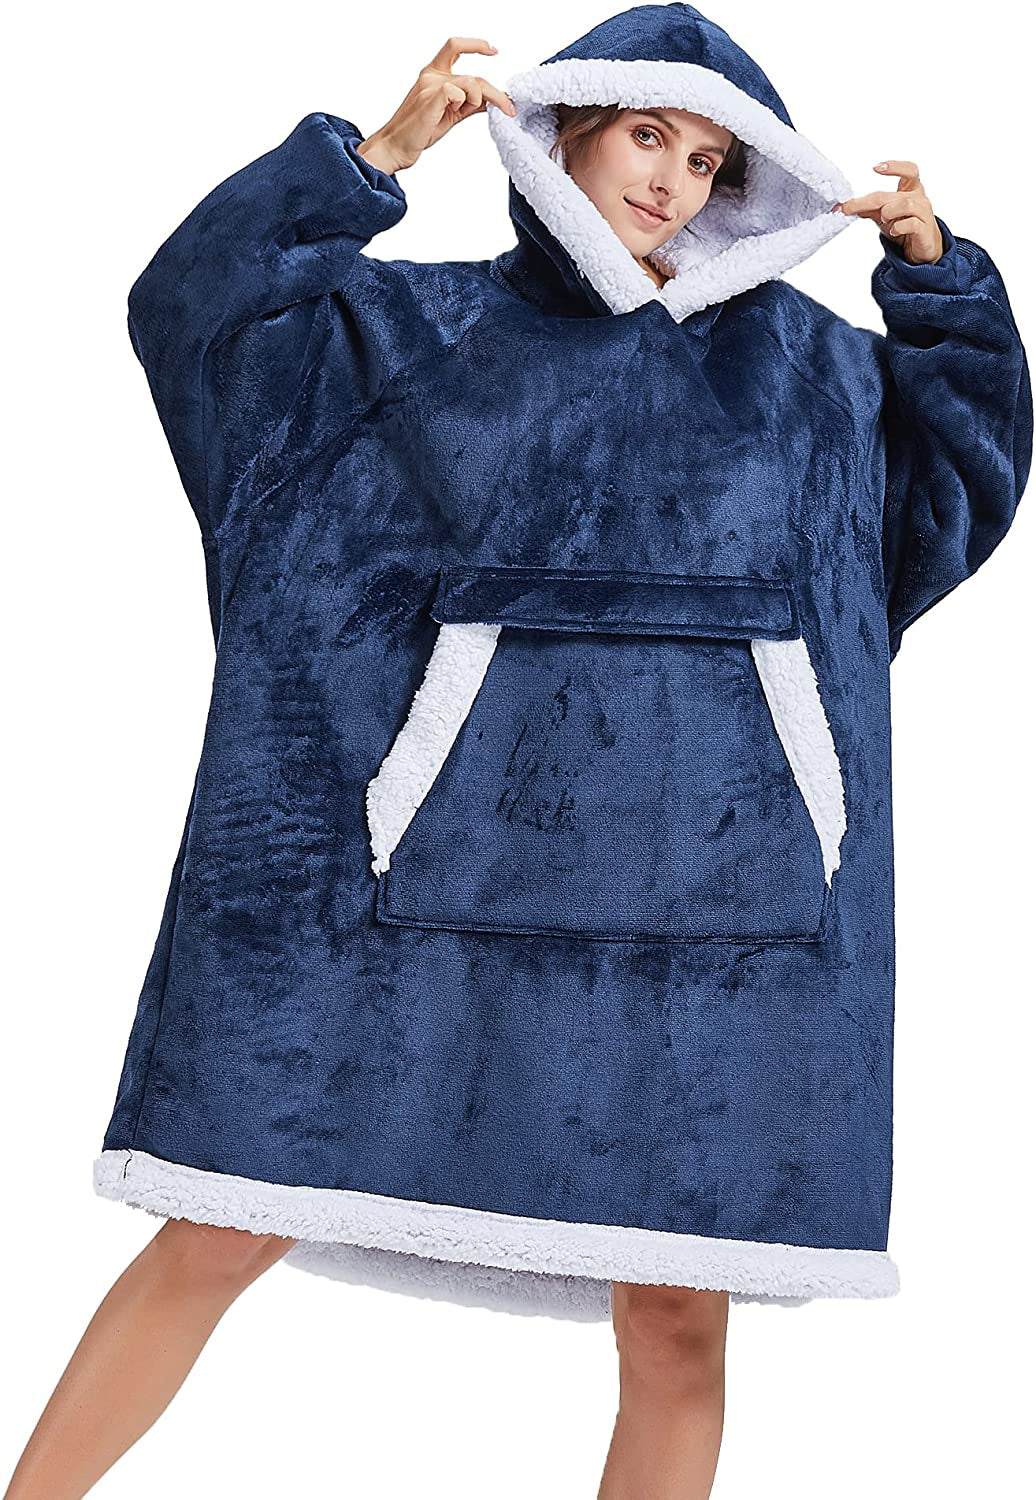 Wearable Blanket Hoodie for Adult Oversized Sherpa Blanket Sweatshirt Hoodie with Sleeves and Giant Pocket Gift for Women Men